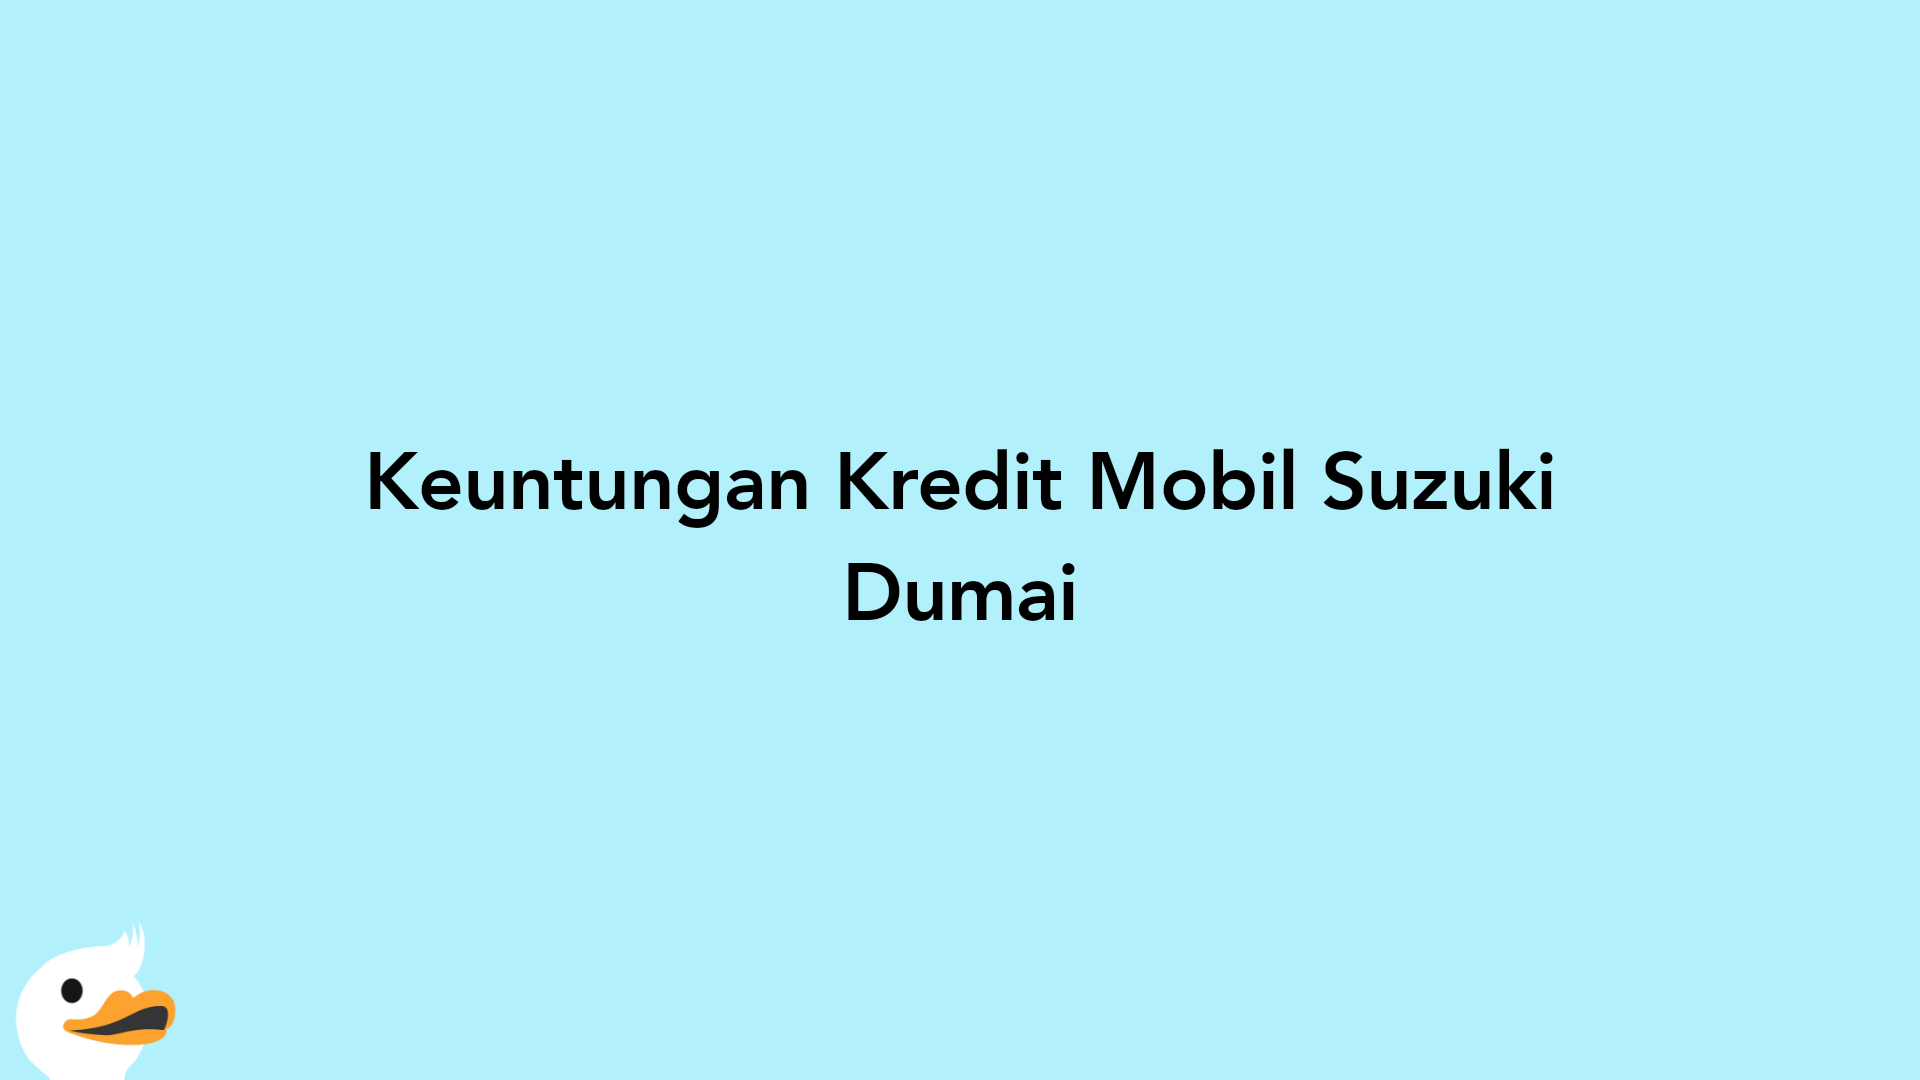 Keuntungan Kredit Mobil Suzuki Dumai